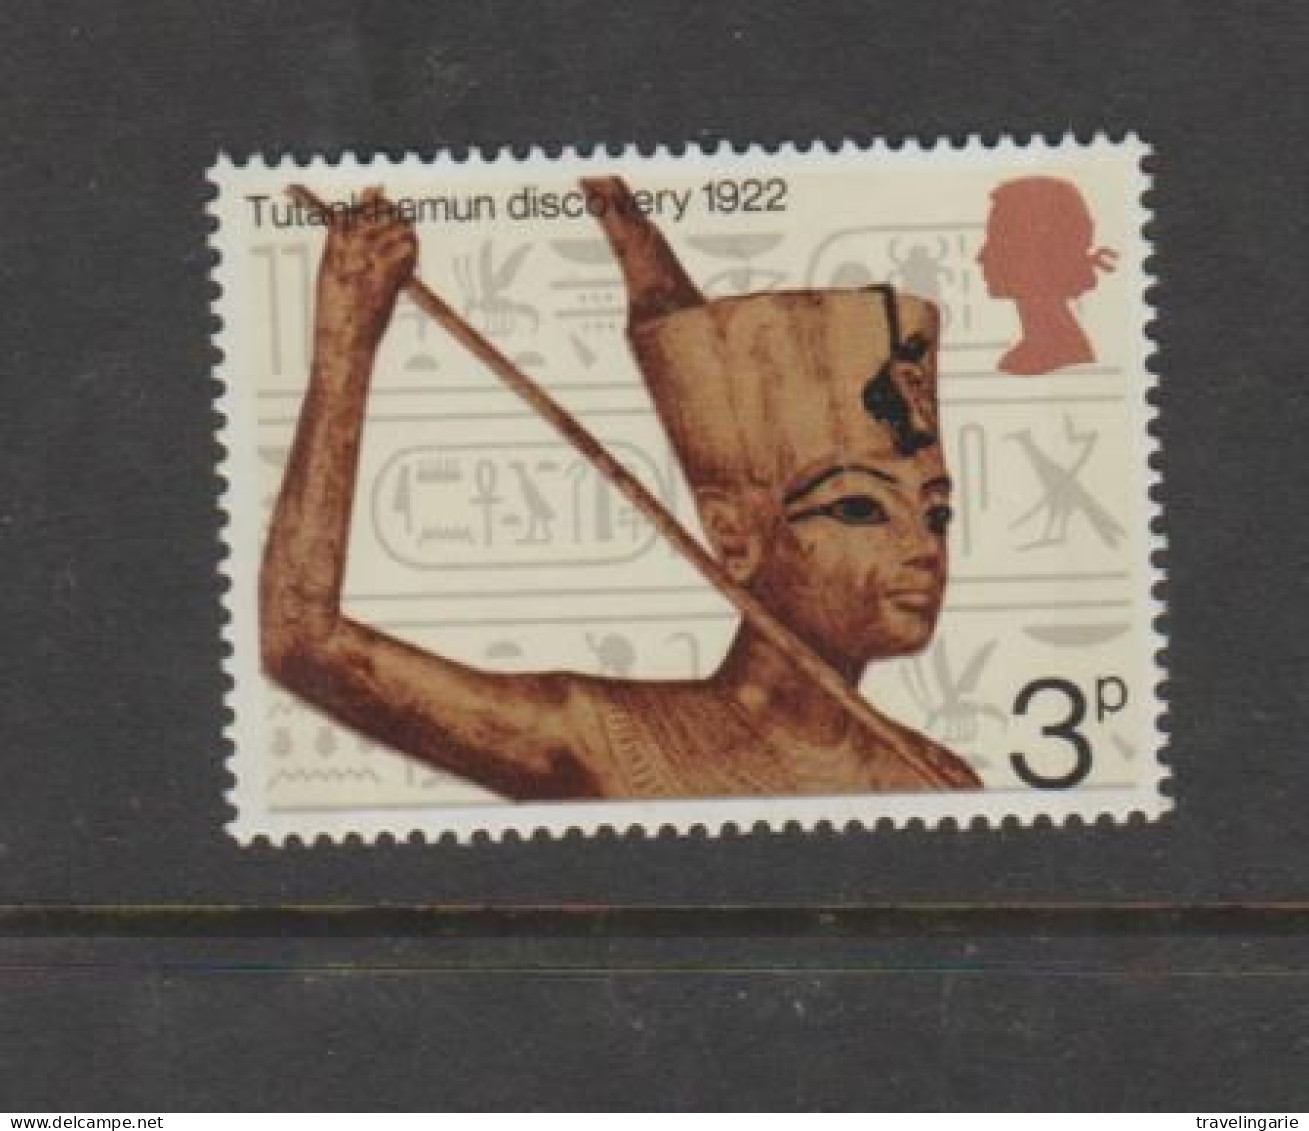 Great Britain 1972 Tutankhamon Discovery 1922 MNH ** - Egyptologie